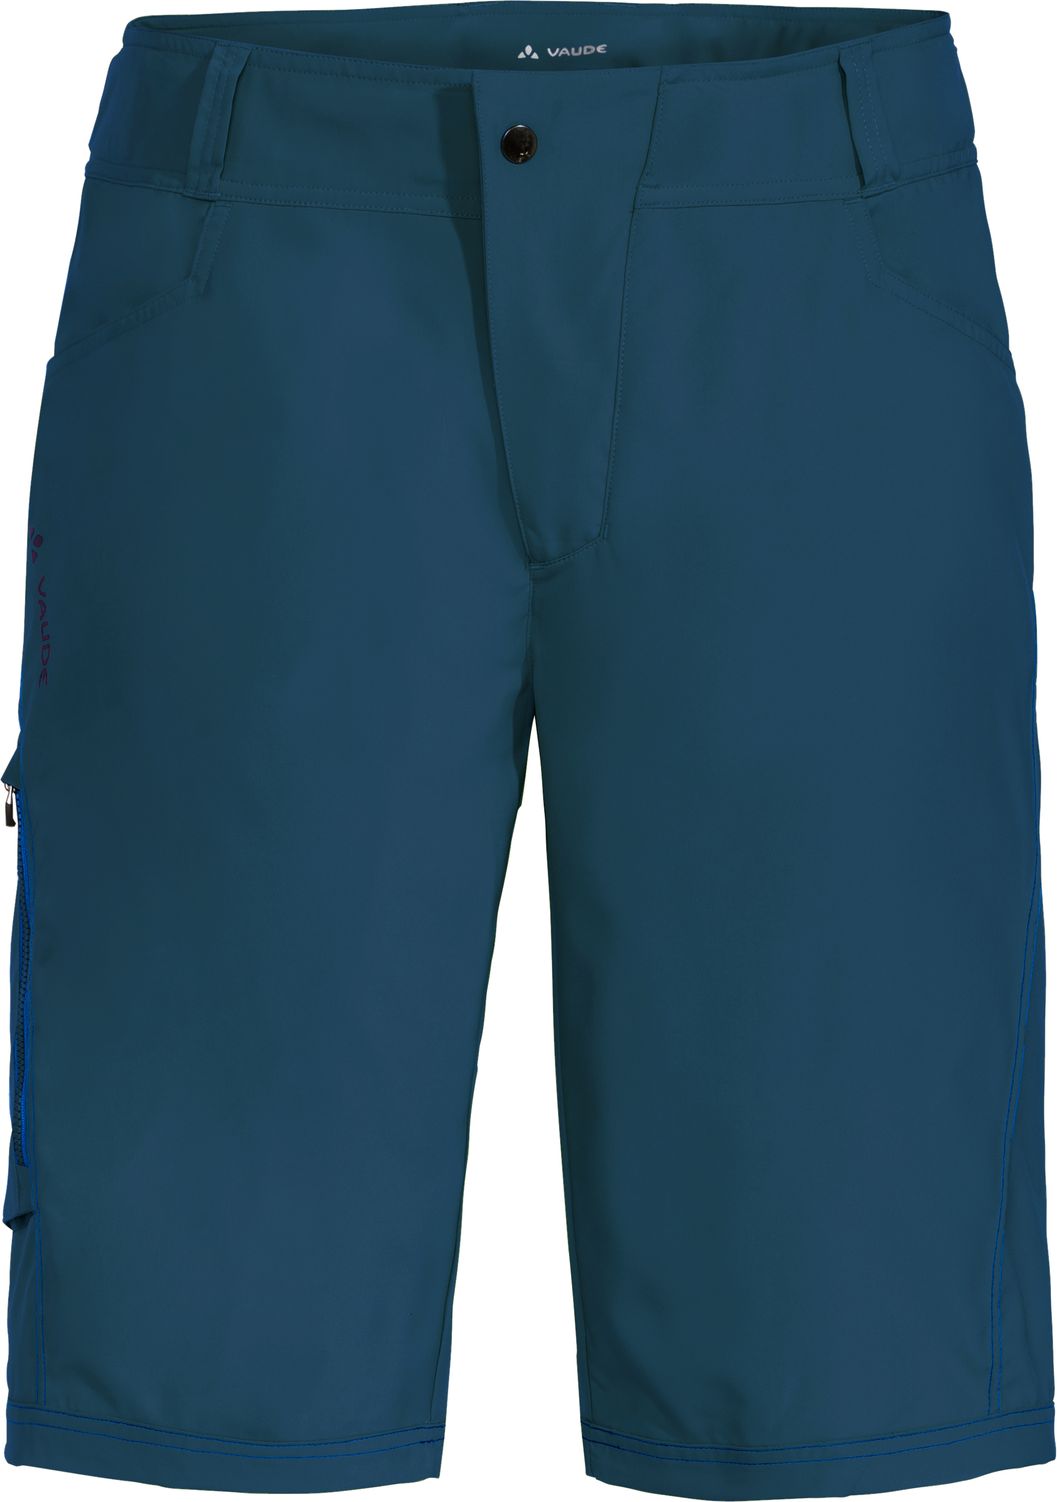 Men's Ledro Shorts baltic sea | L | online kaufen bei